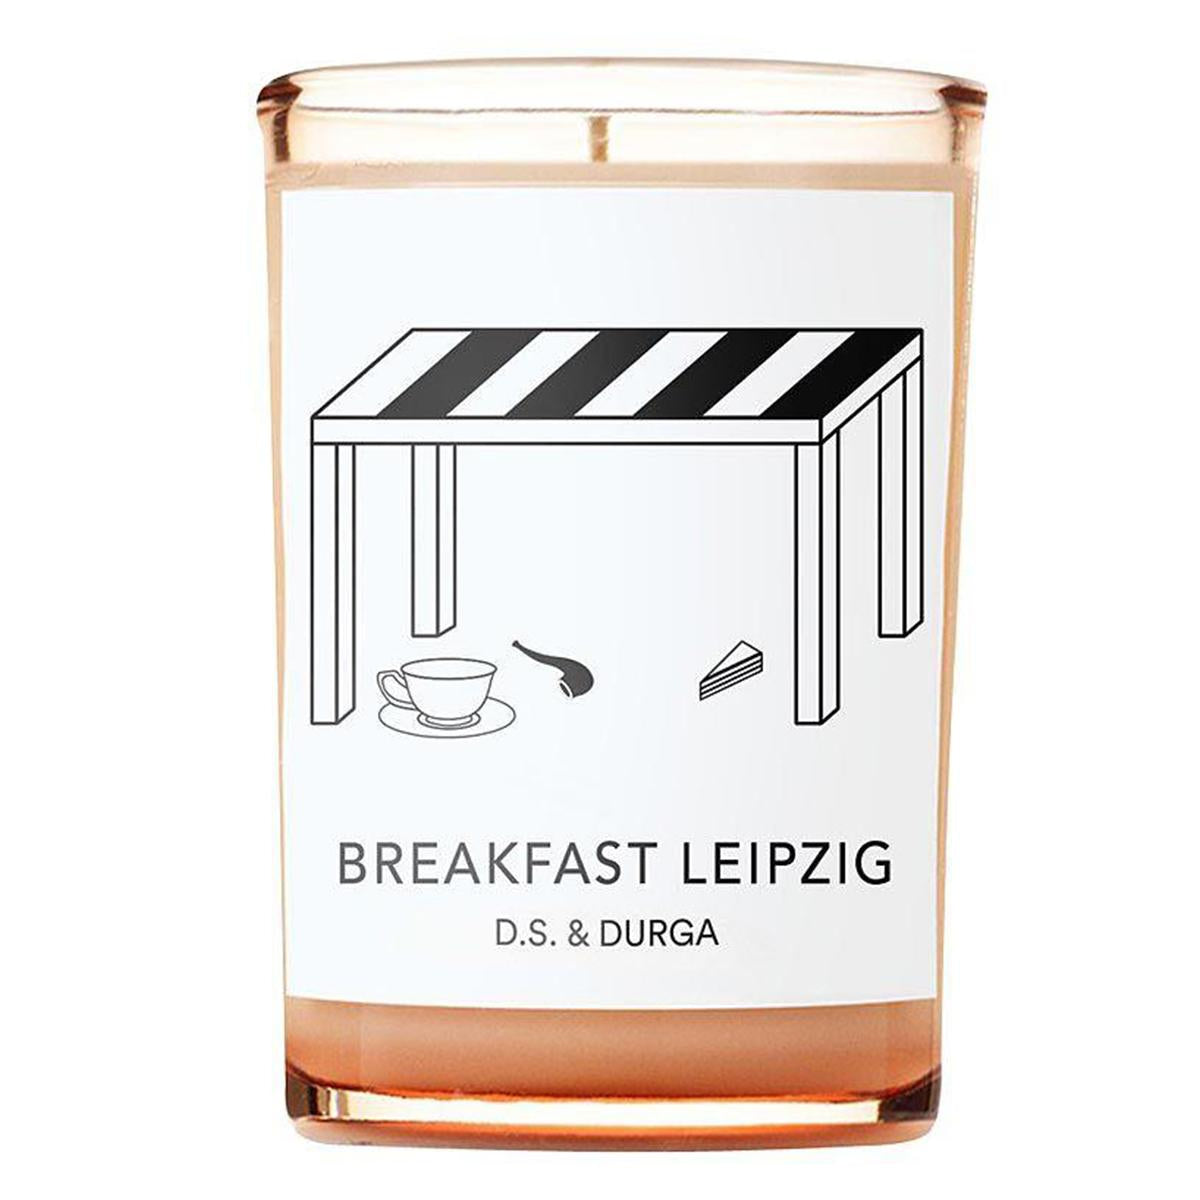 Primary image of Breakfast Leipzig Candle